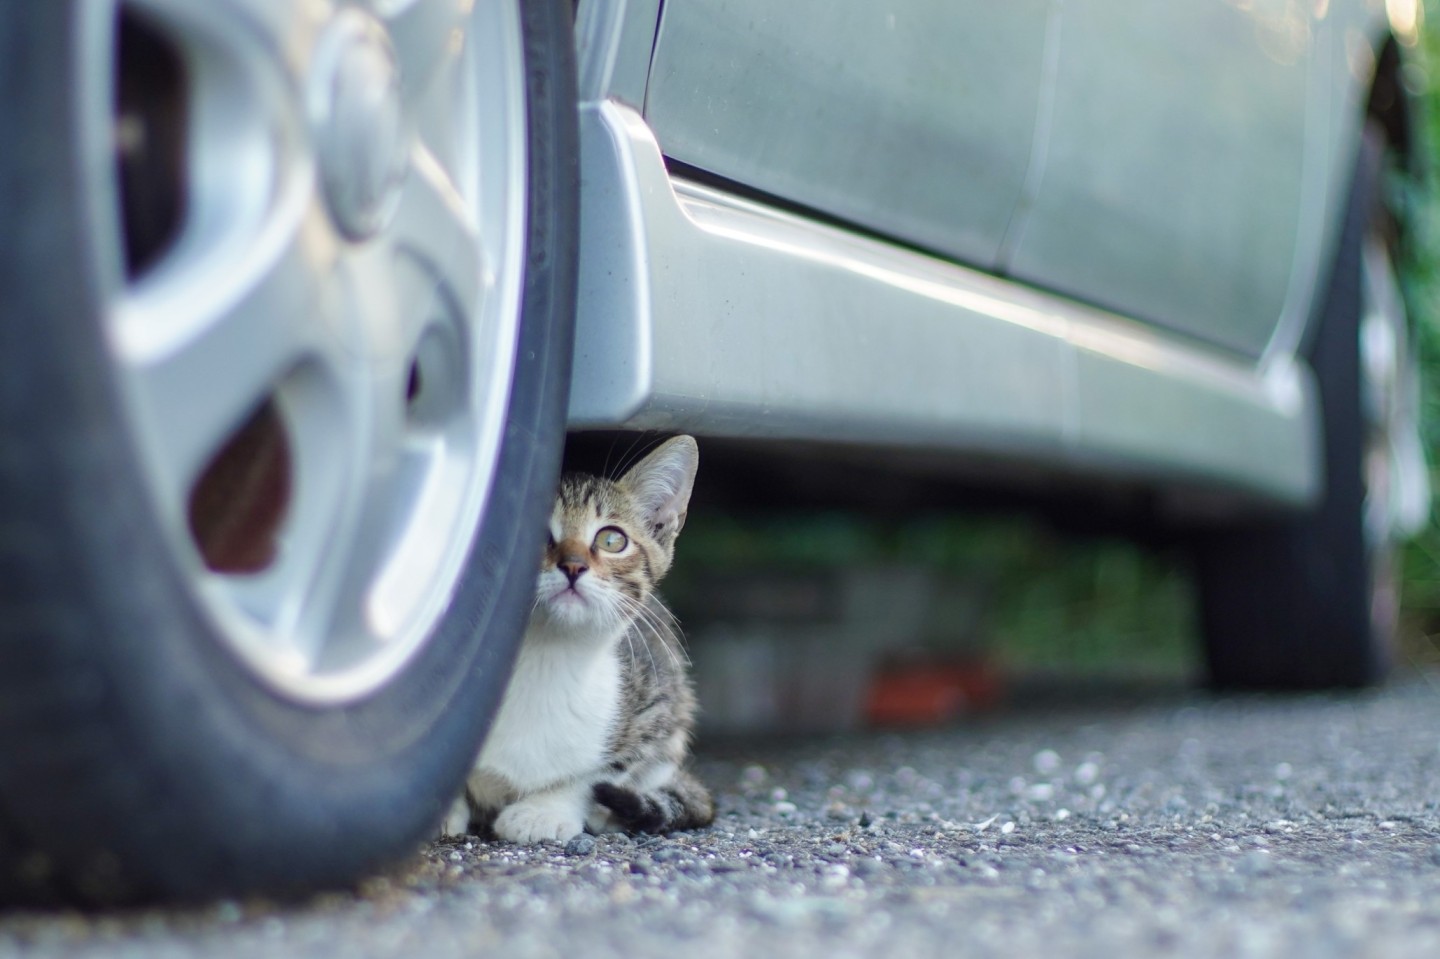 A small cat hiding under a car wheel